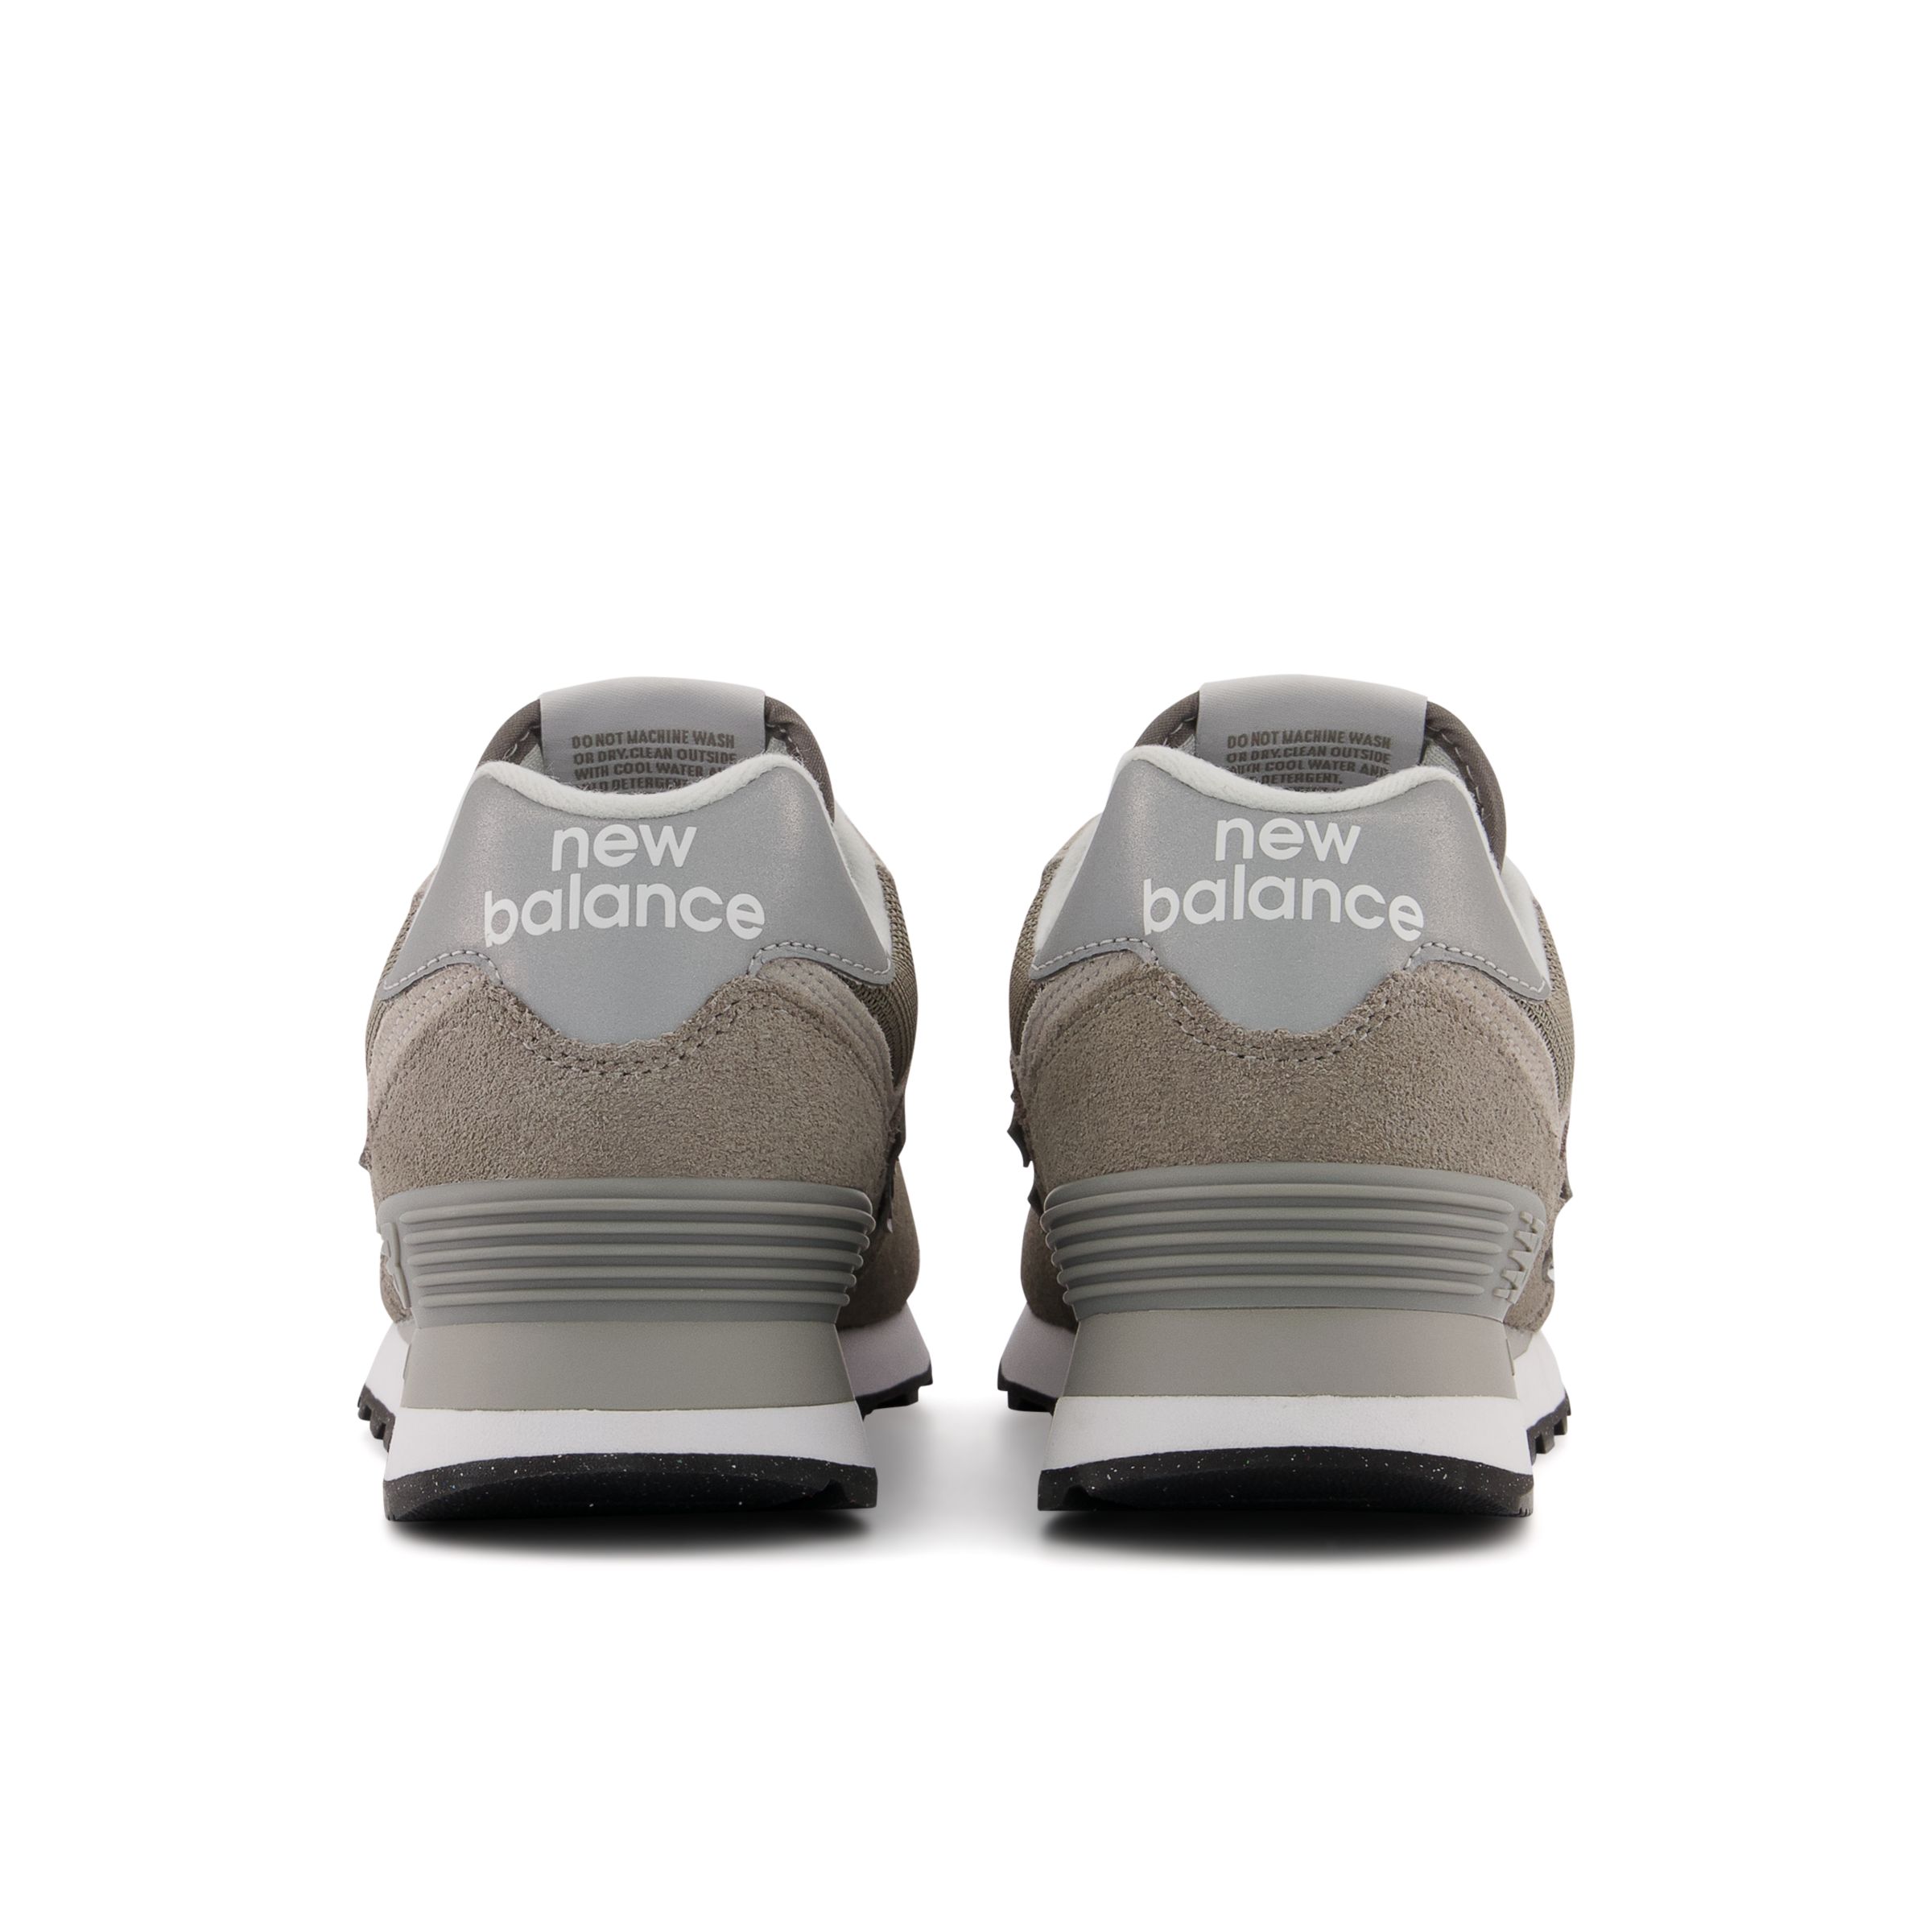  New Balance Women's 574 Core Sneaker, Nimbus Cloud/White, 5